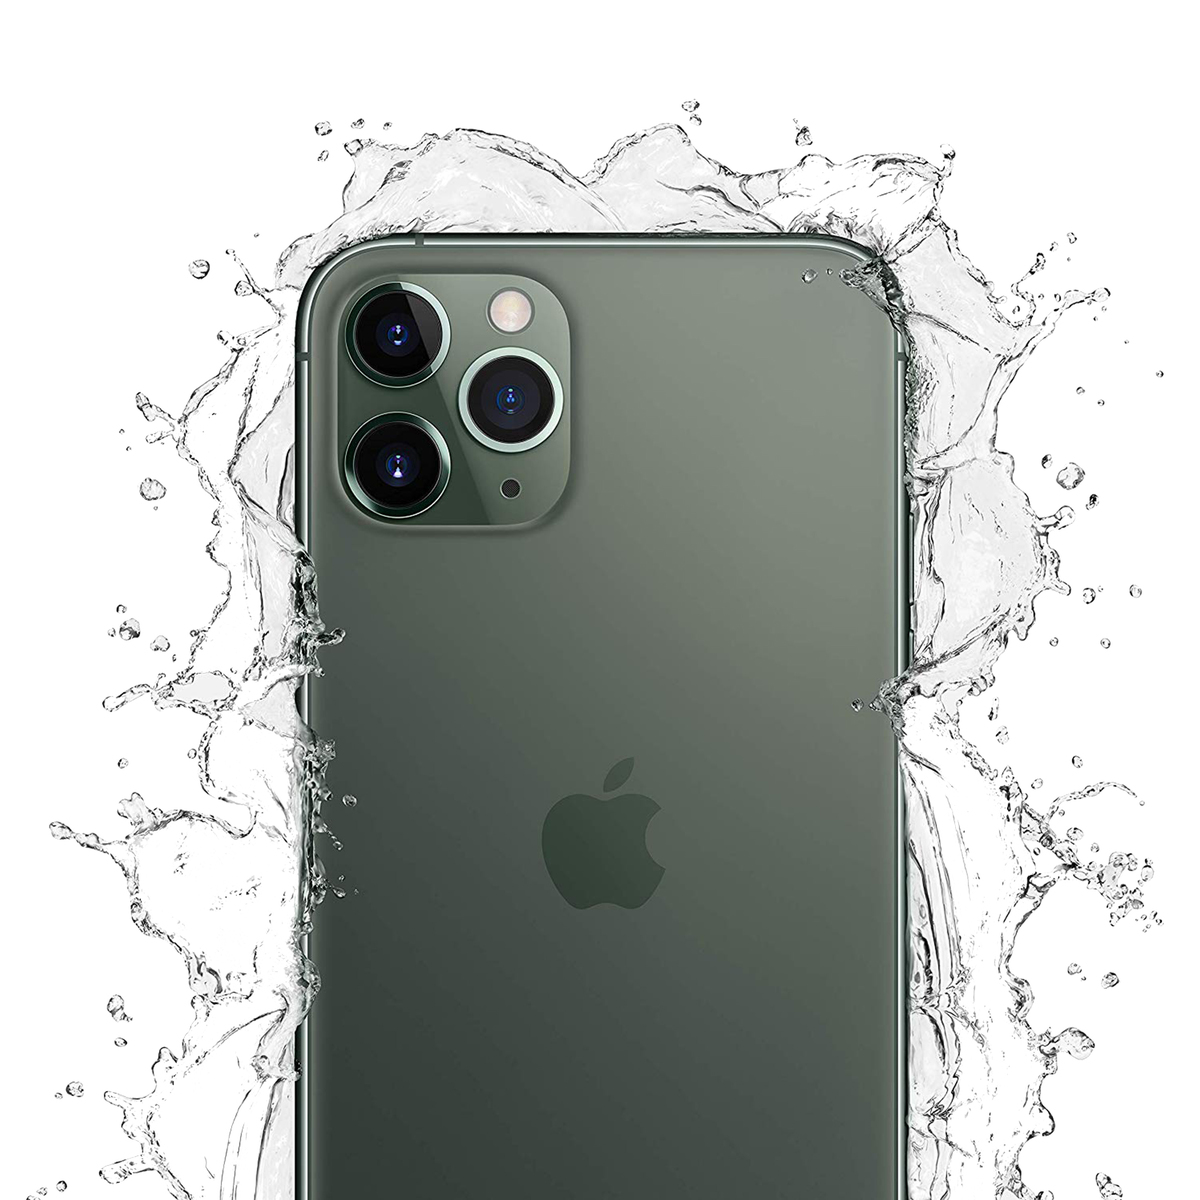 Apple iPhone 11 Pro Max 256GB Midnight green